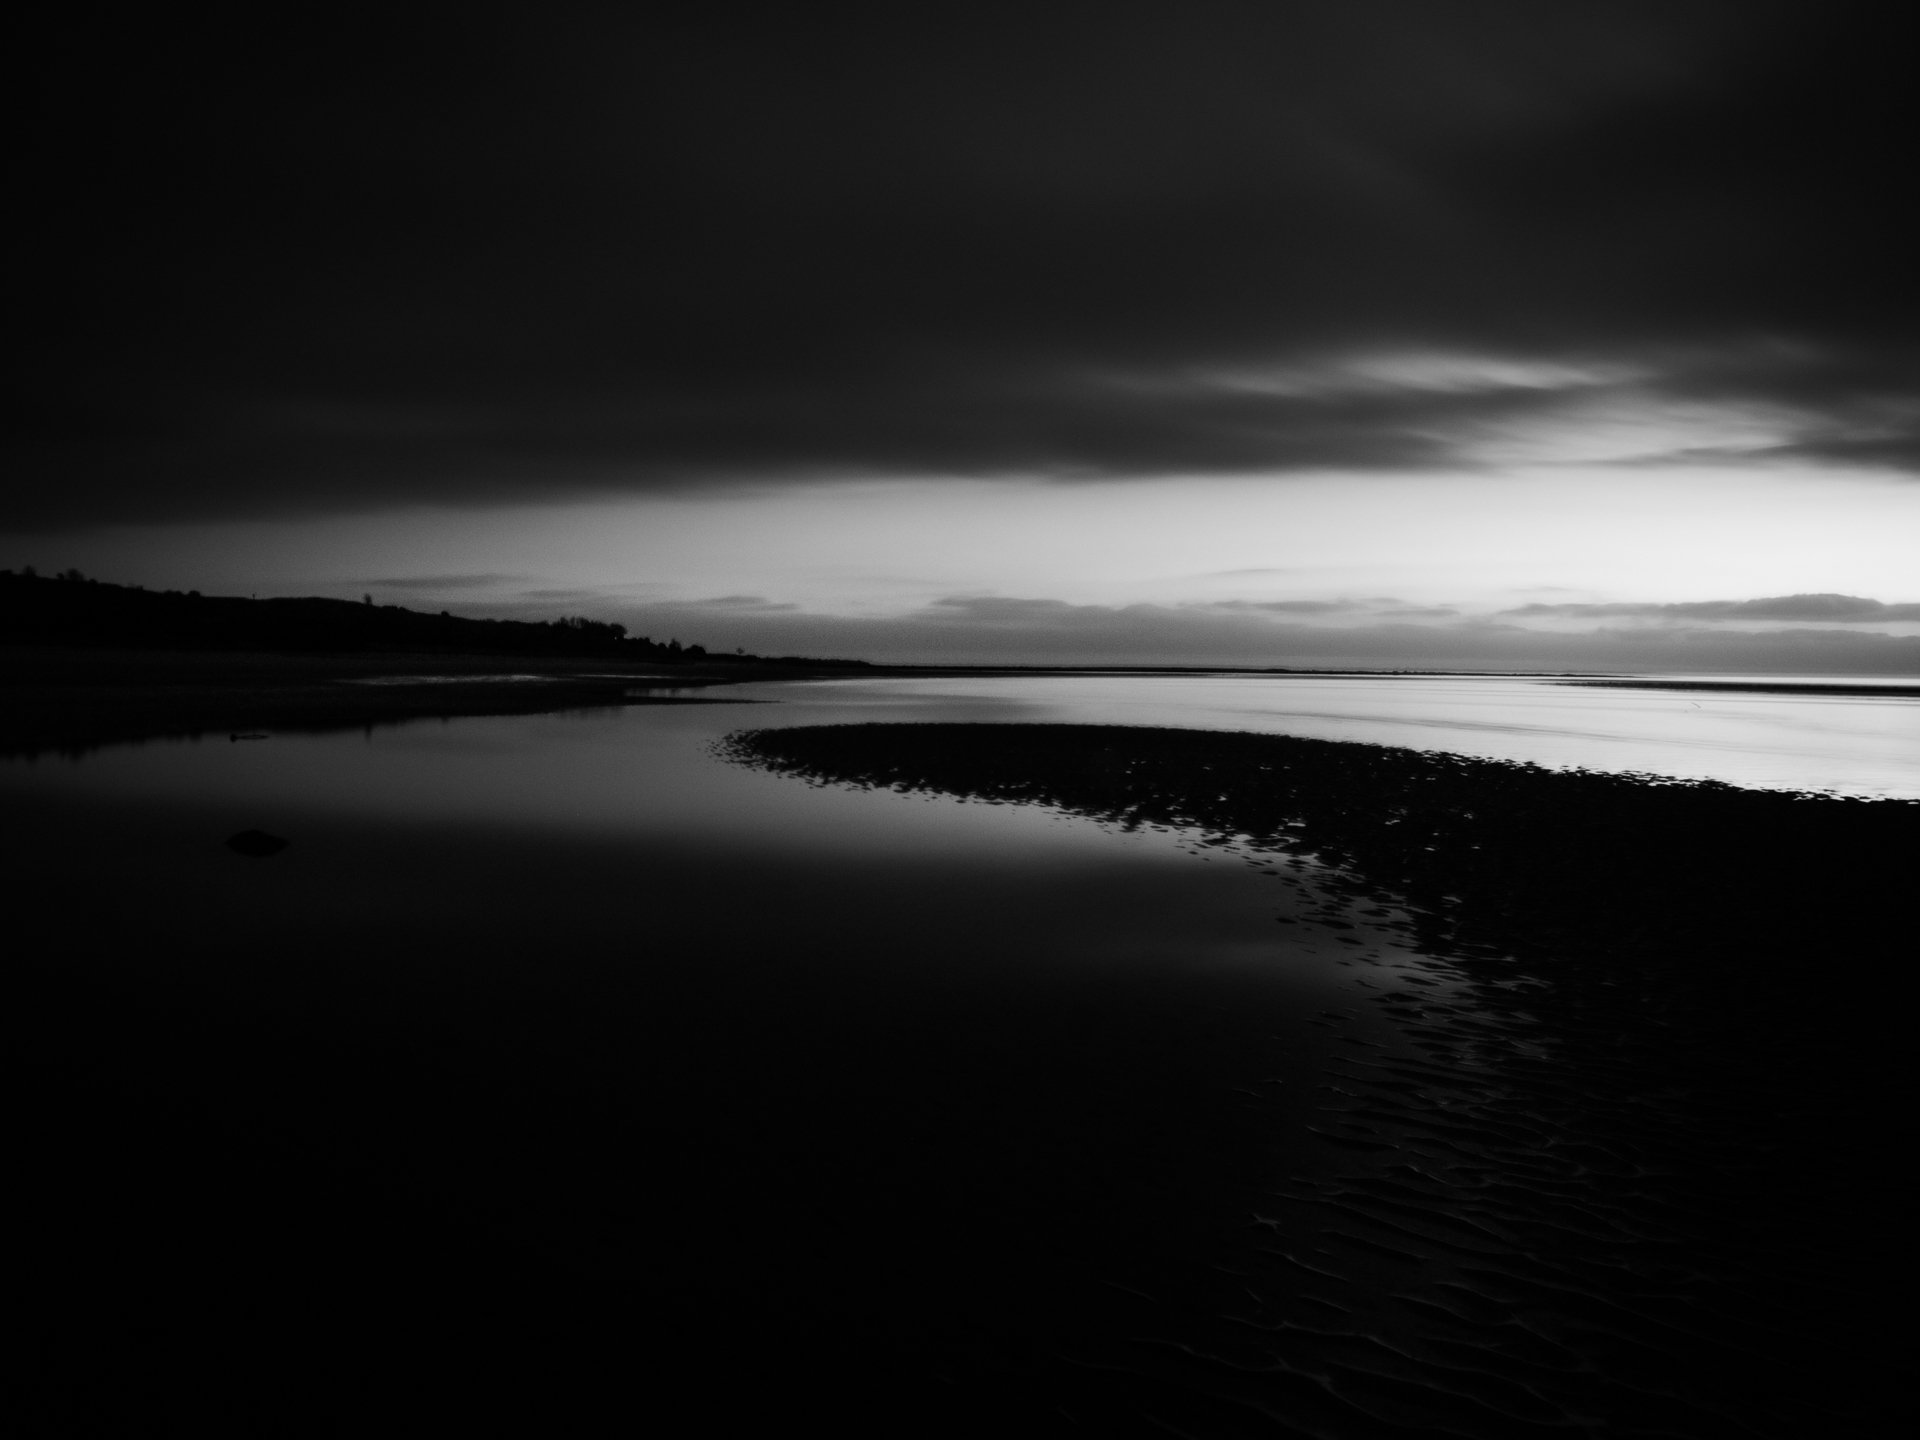 Dawn image of the beach in monochrome